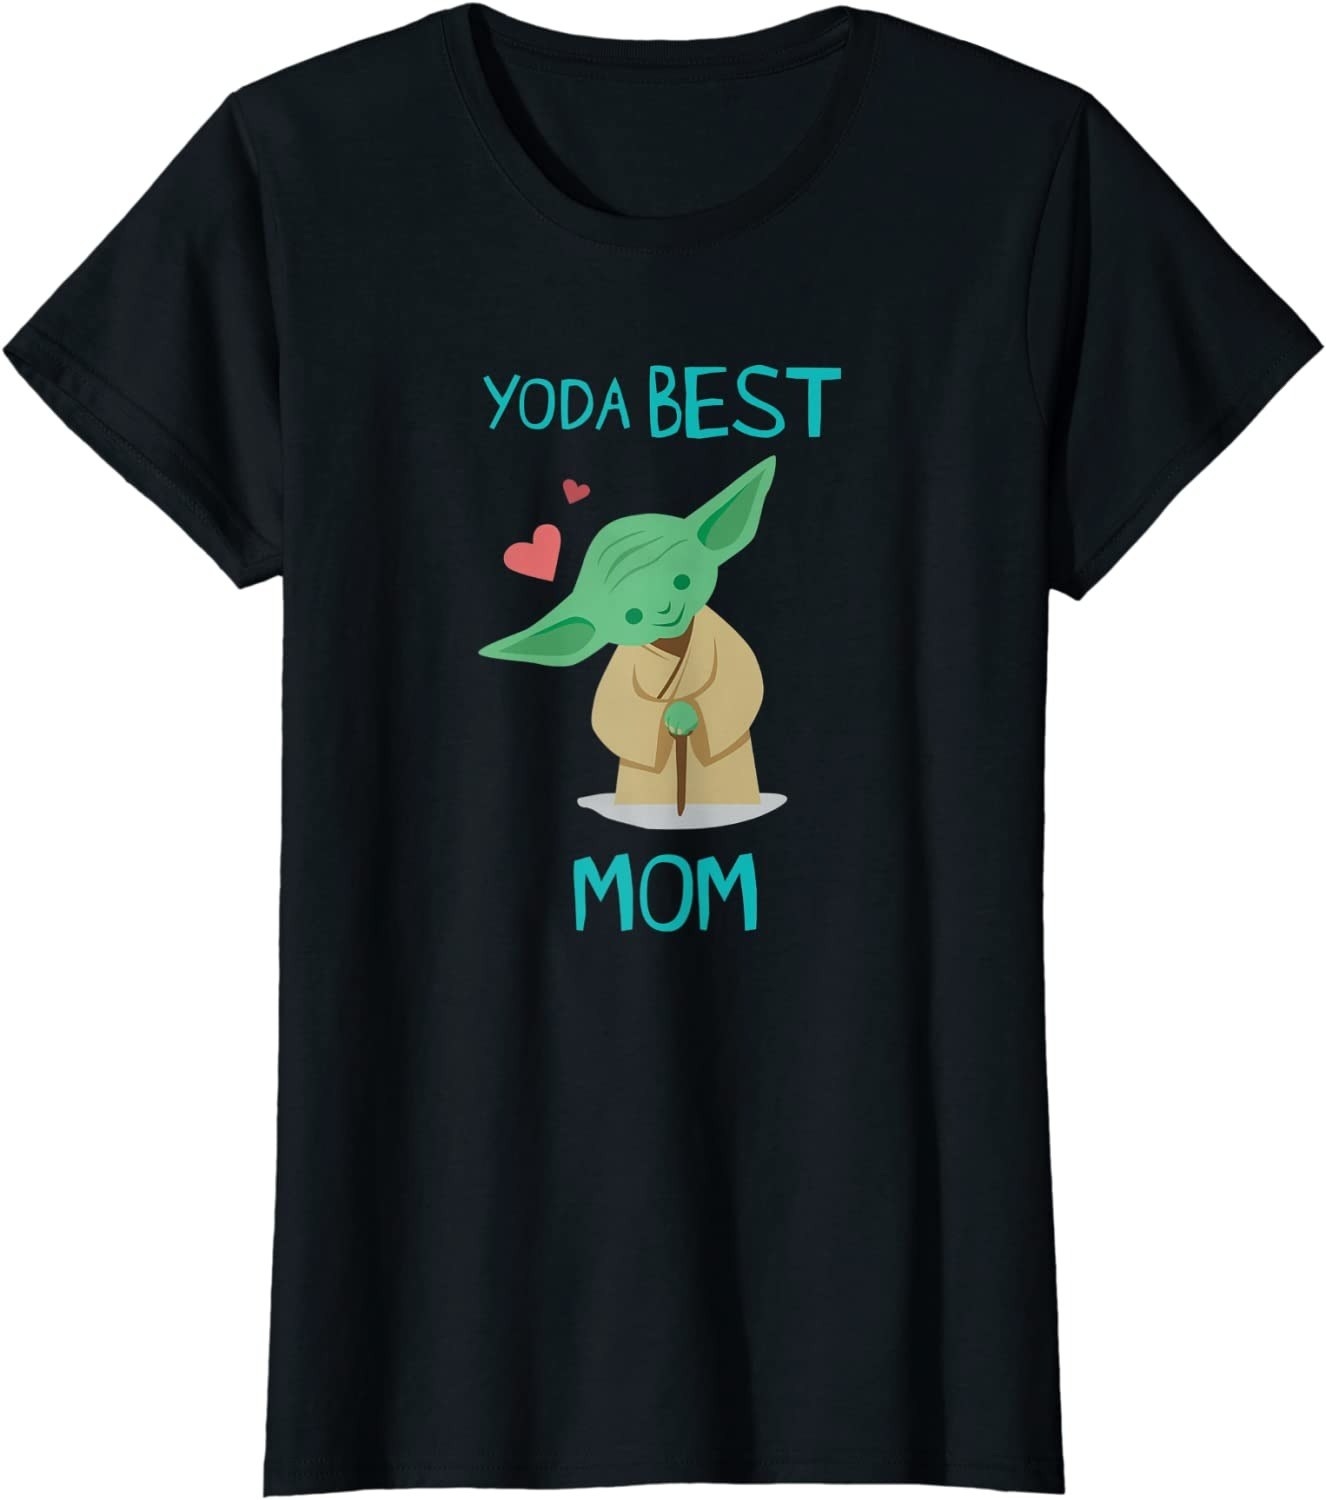 the black yoda t-shirt that says yoda best mom